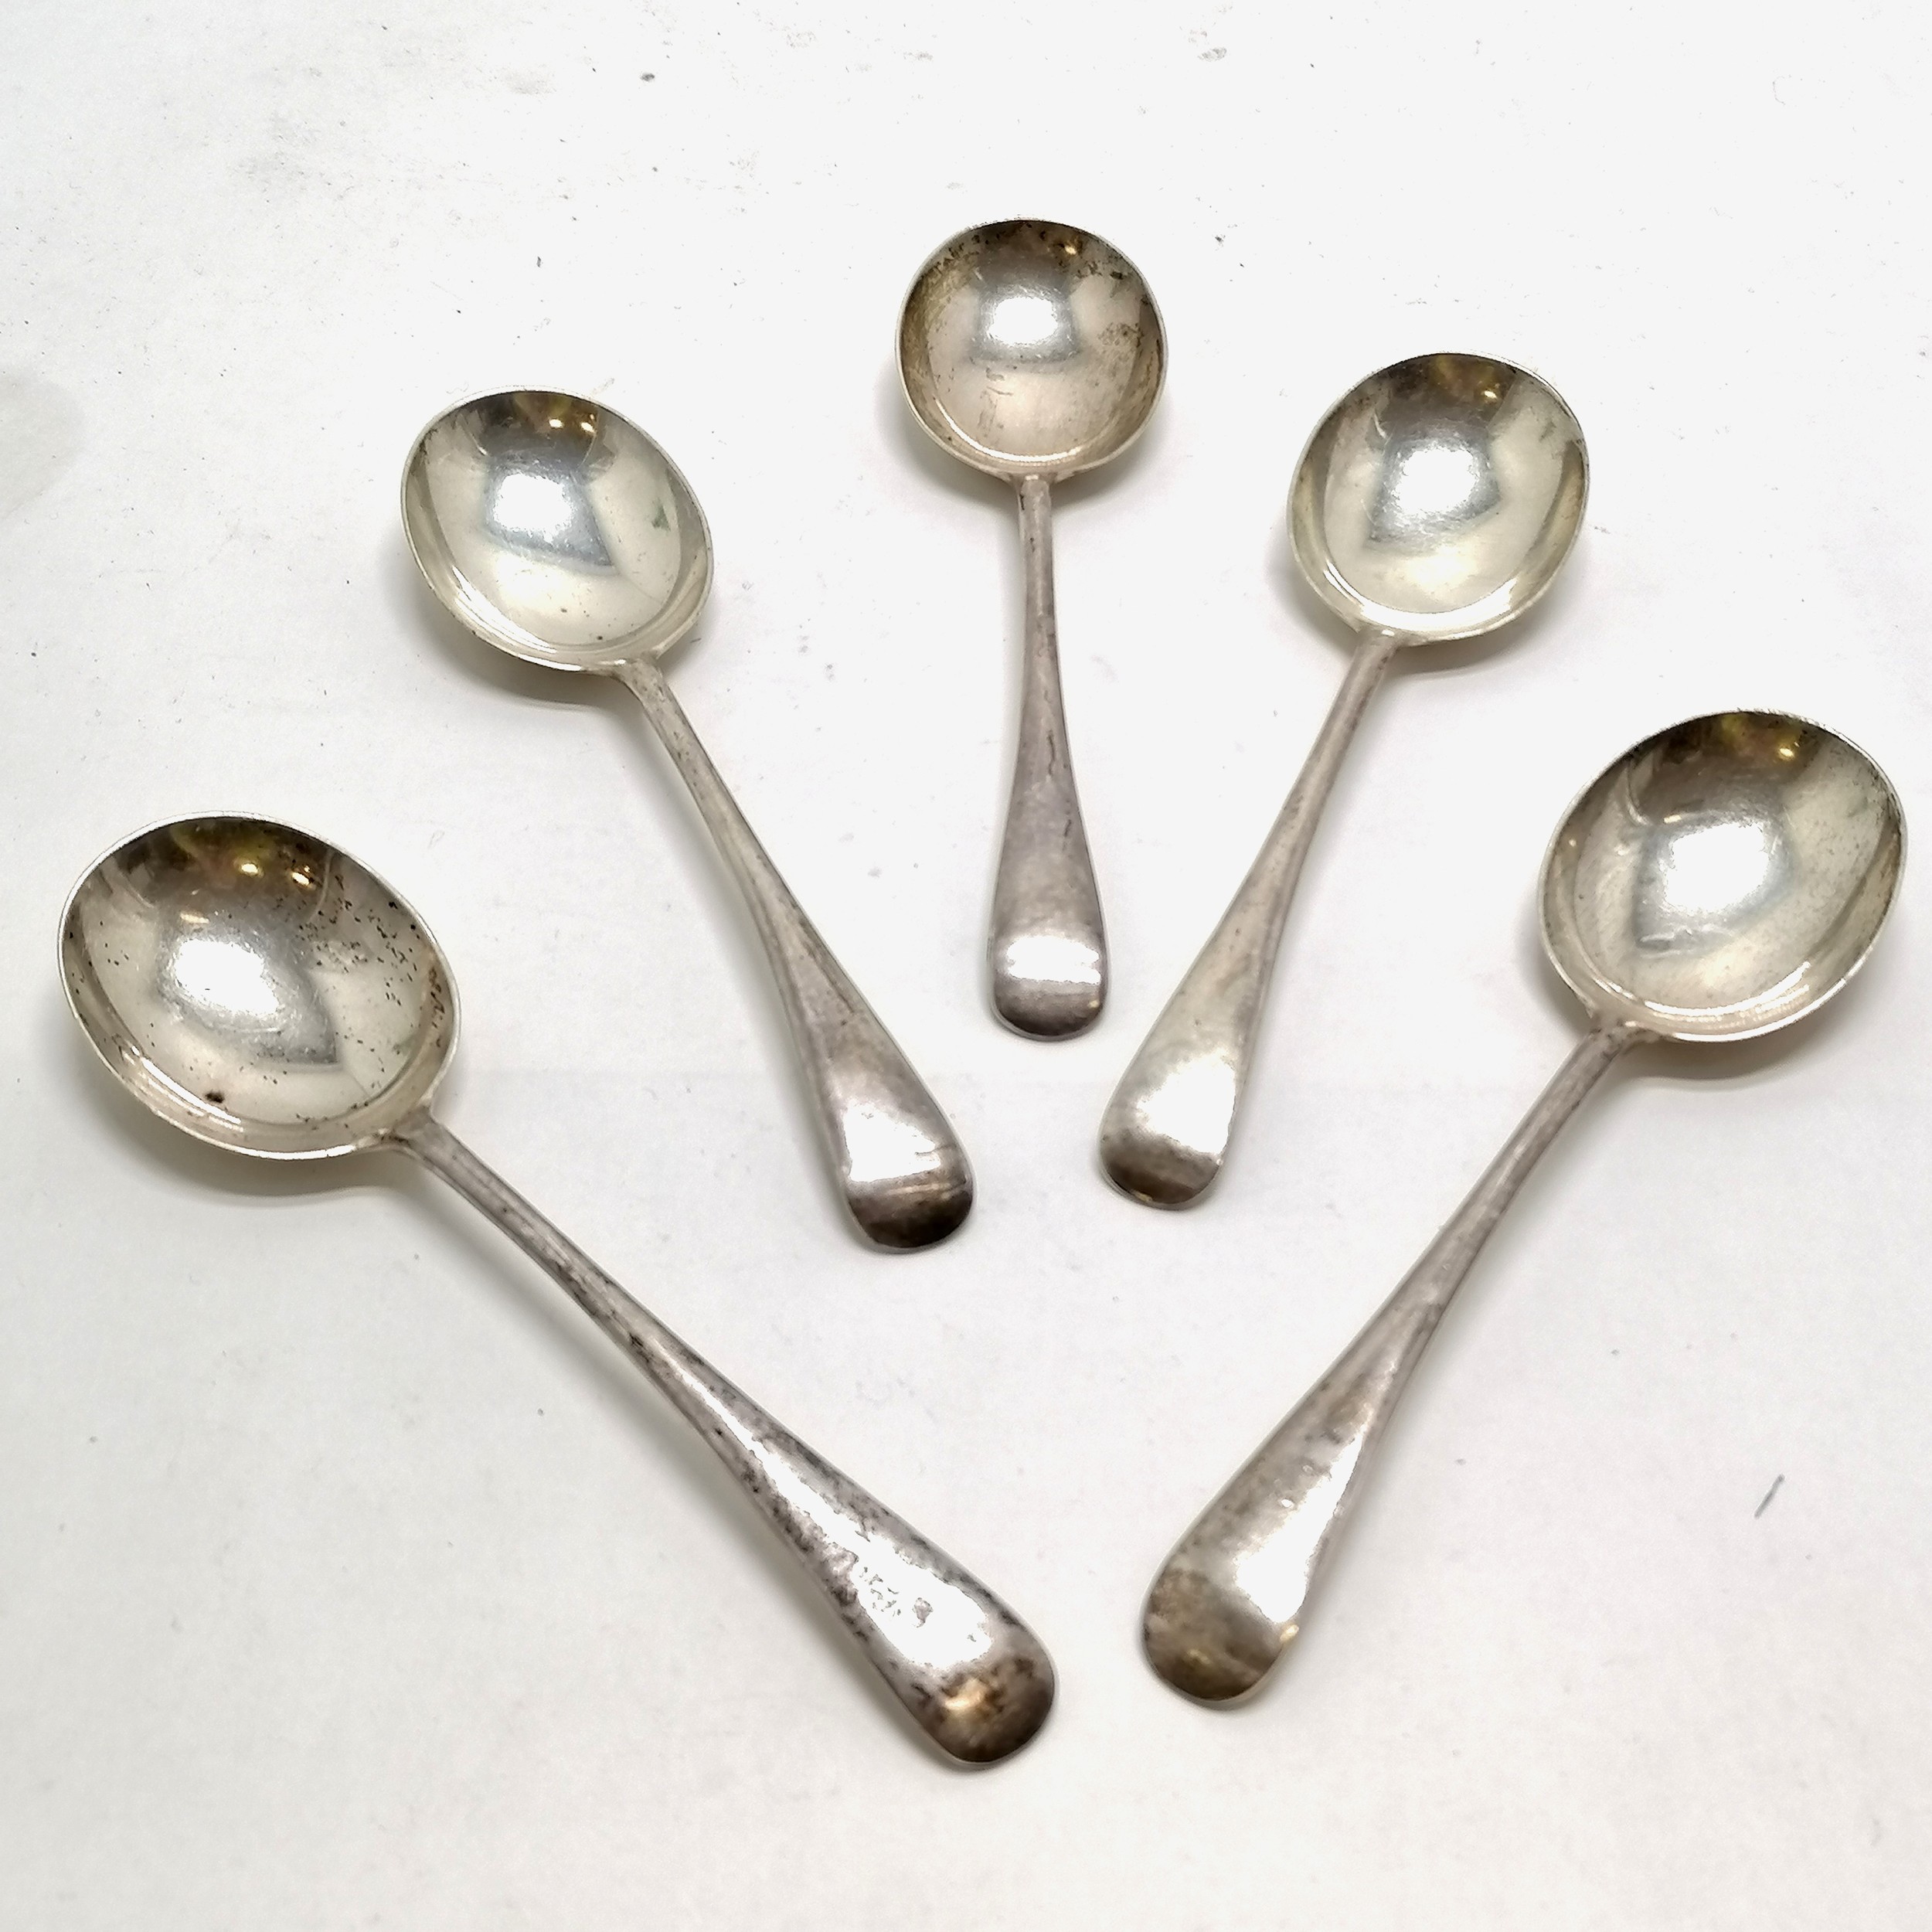 1931 5 x silver soup spoons by Josiah Williams & Co (David Landsborough Fullerton) - 19.5cm & 360g - Image 3 of 3